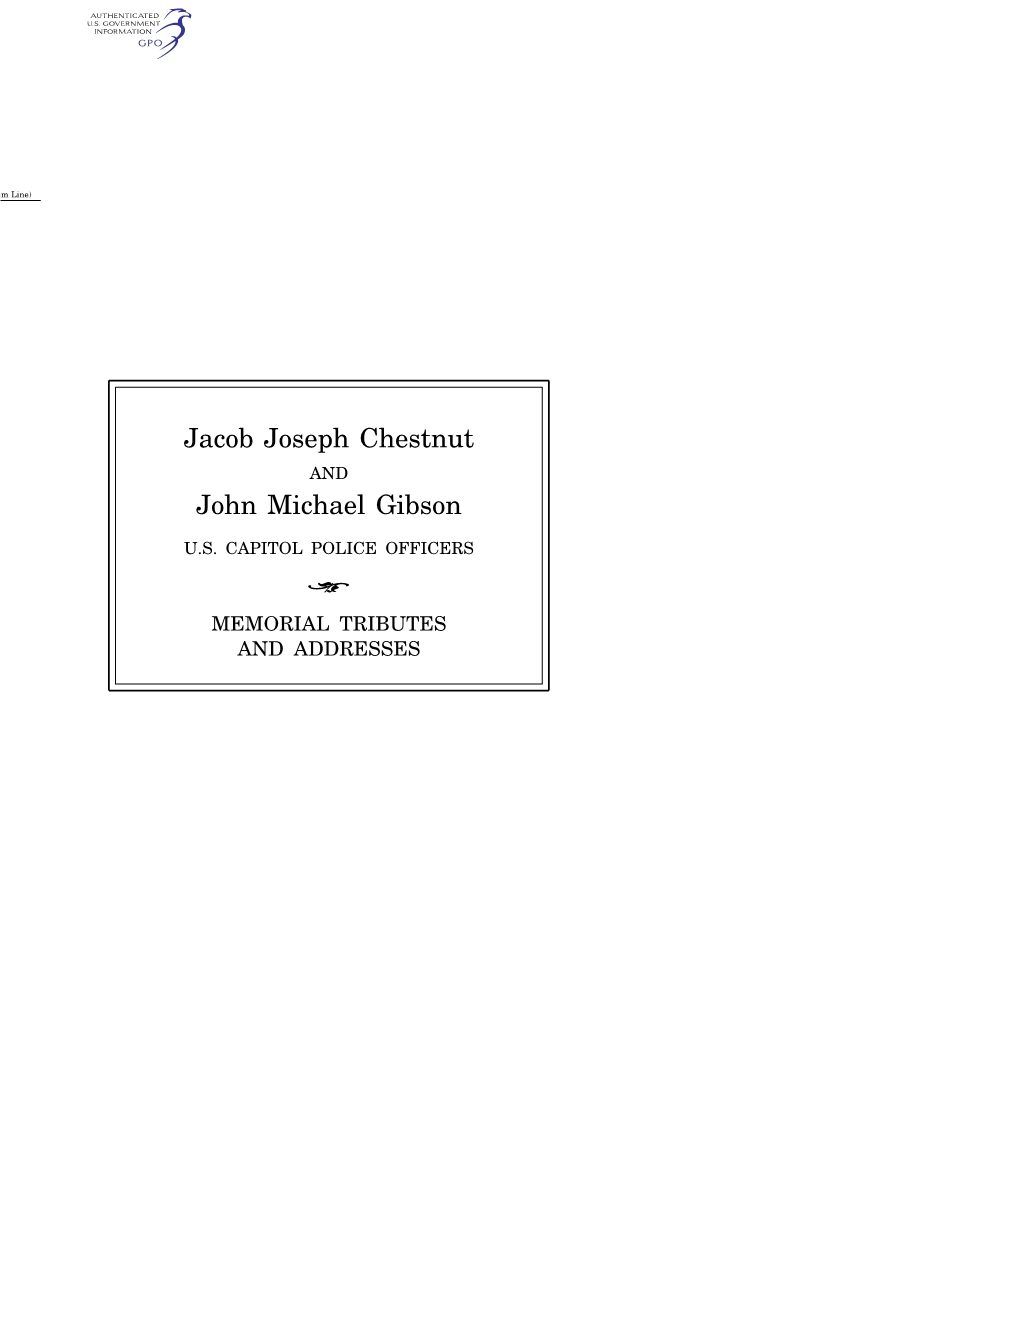 Jacob Joseph Chestnut John Michael Gibson